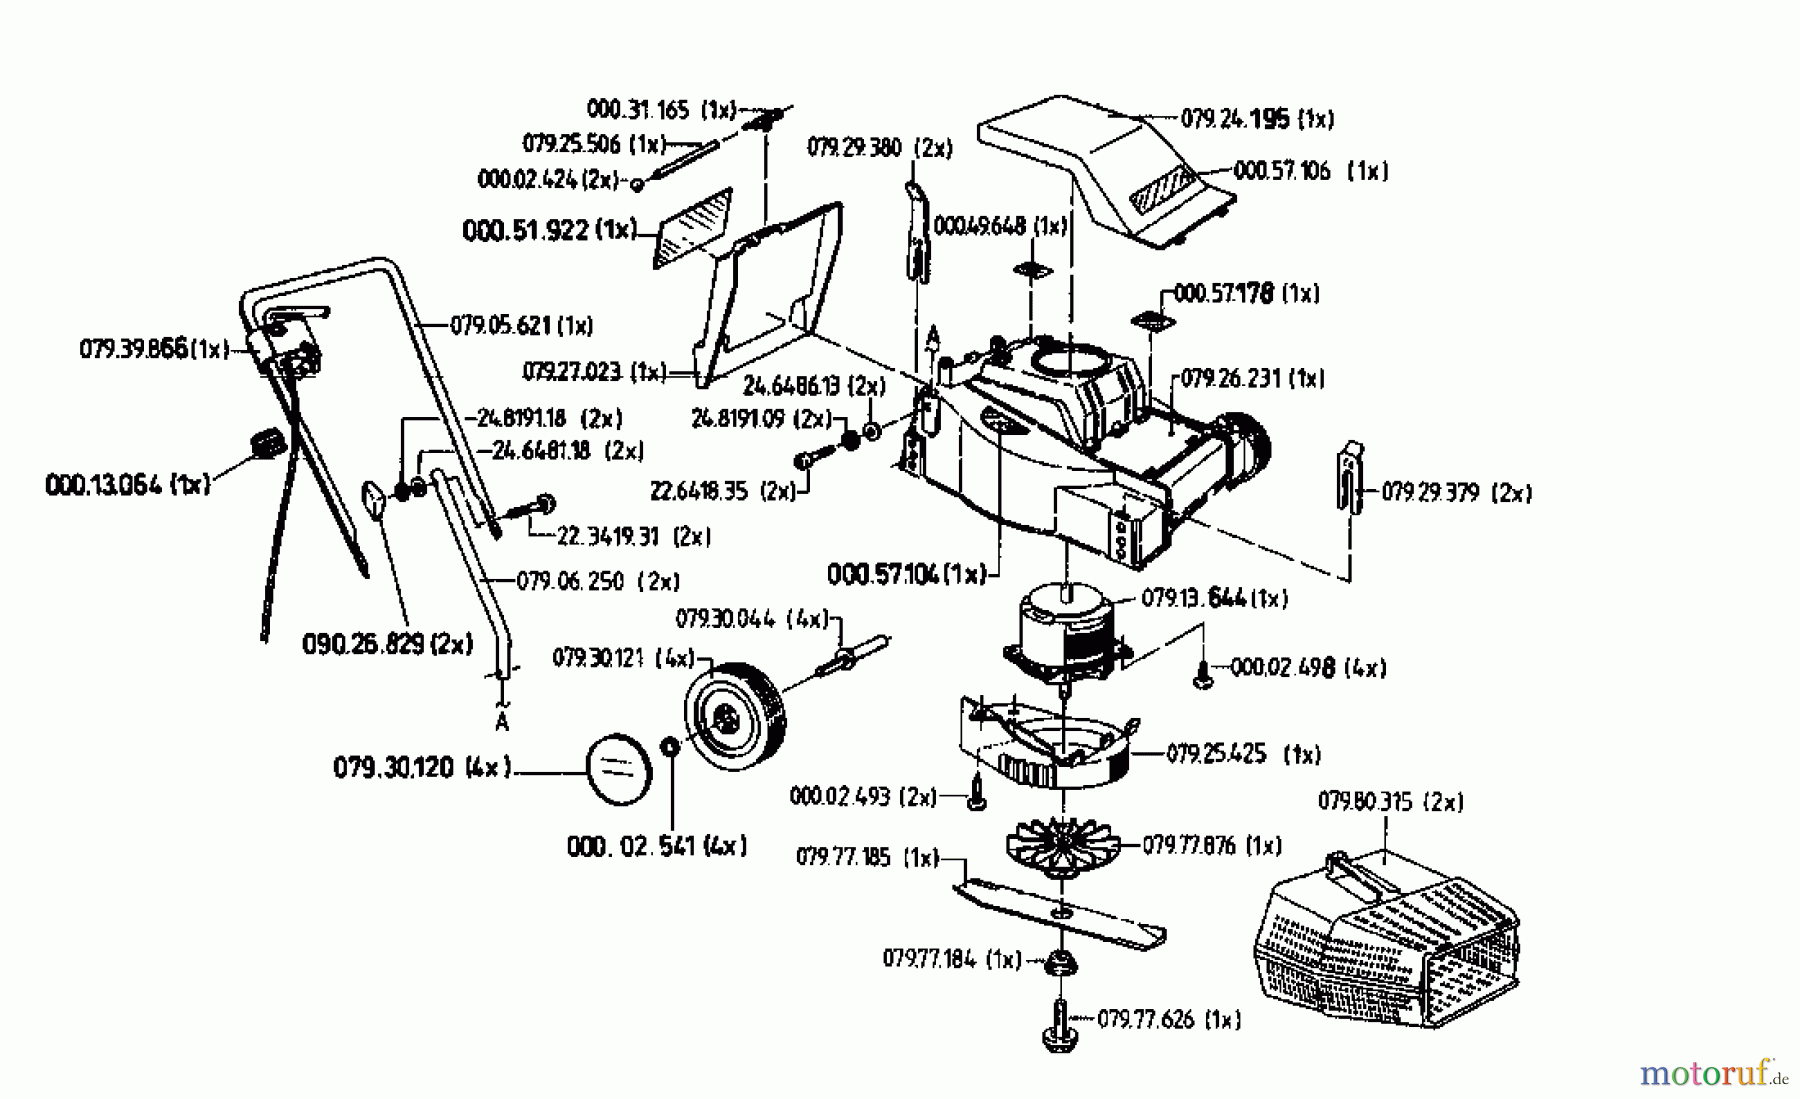  Golf Electric mower Junior-PL 04027.04  (1996) Basic machine